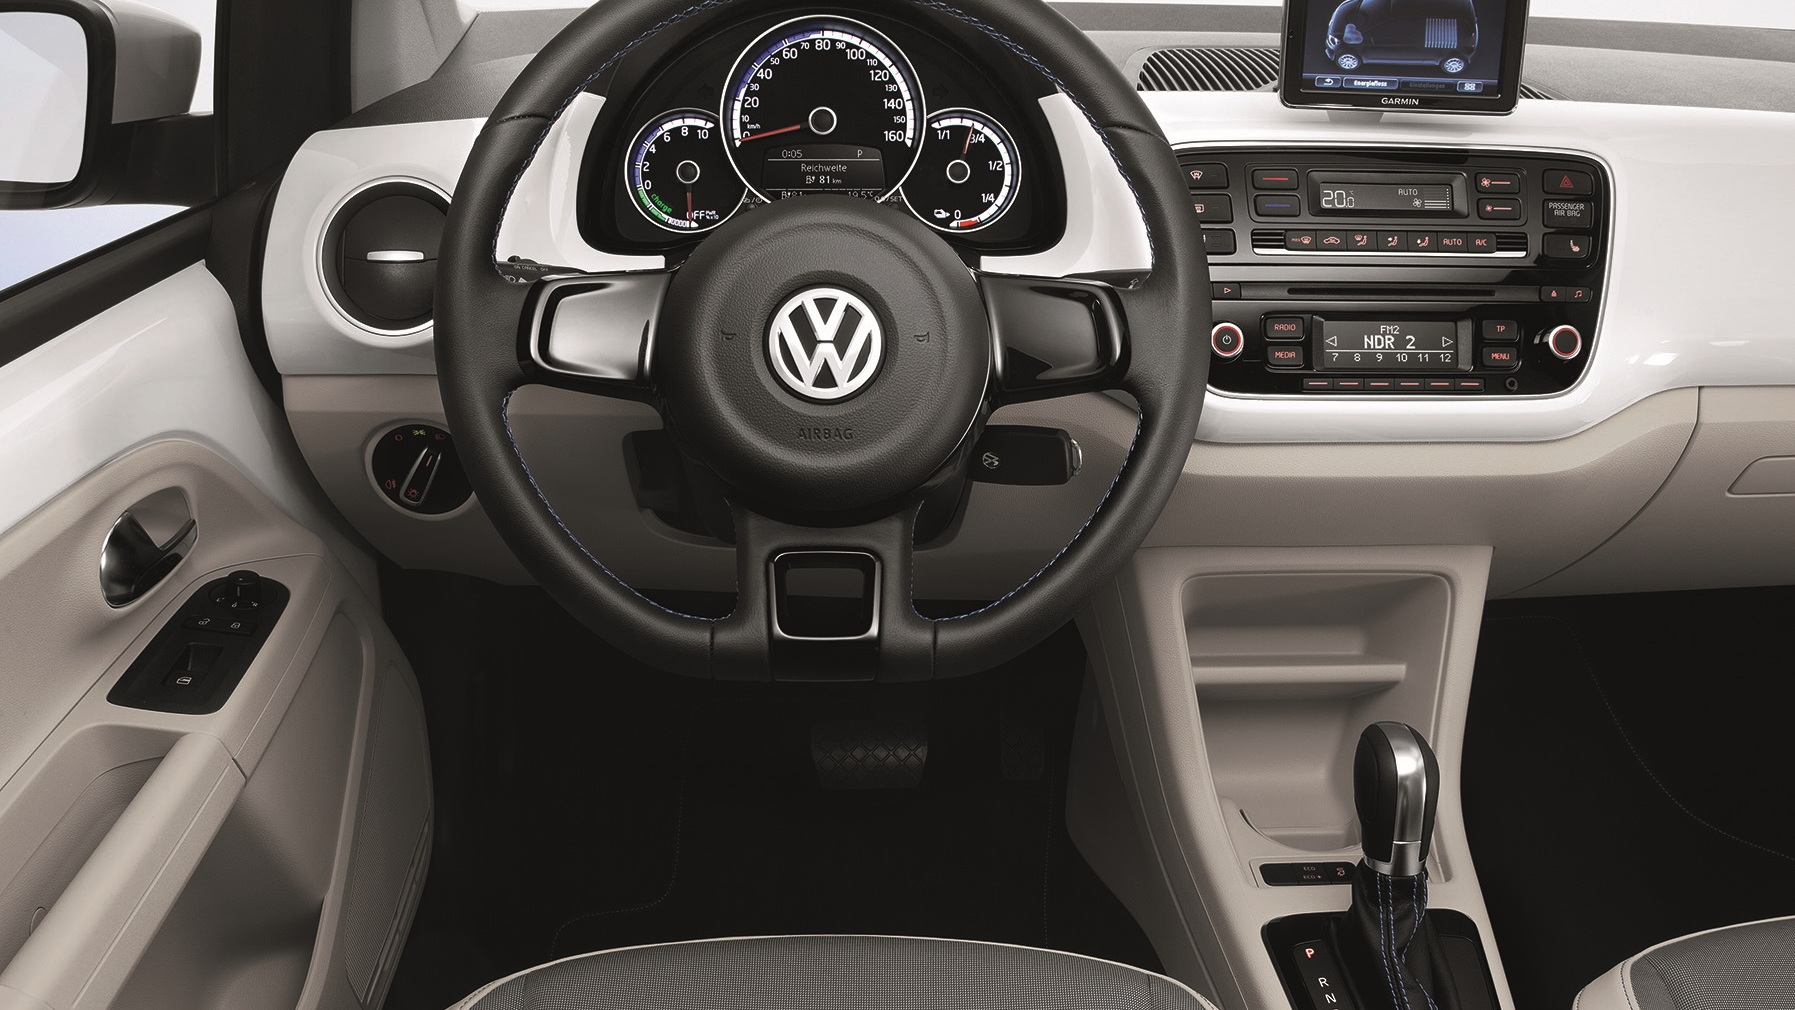 2014 Volkswagen e-Up electric minicar